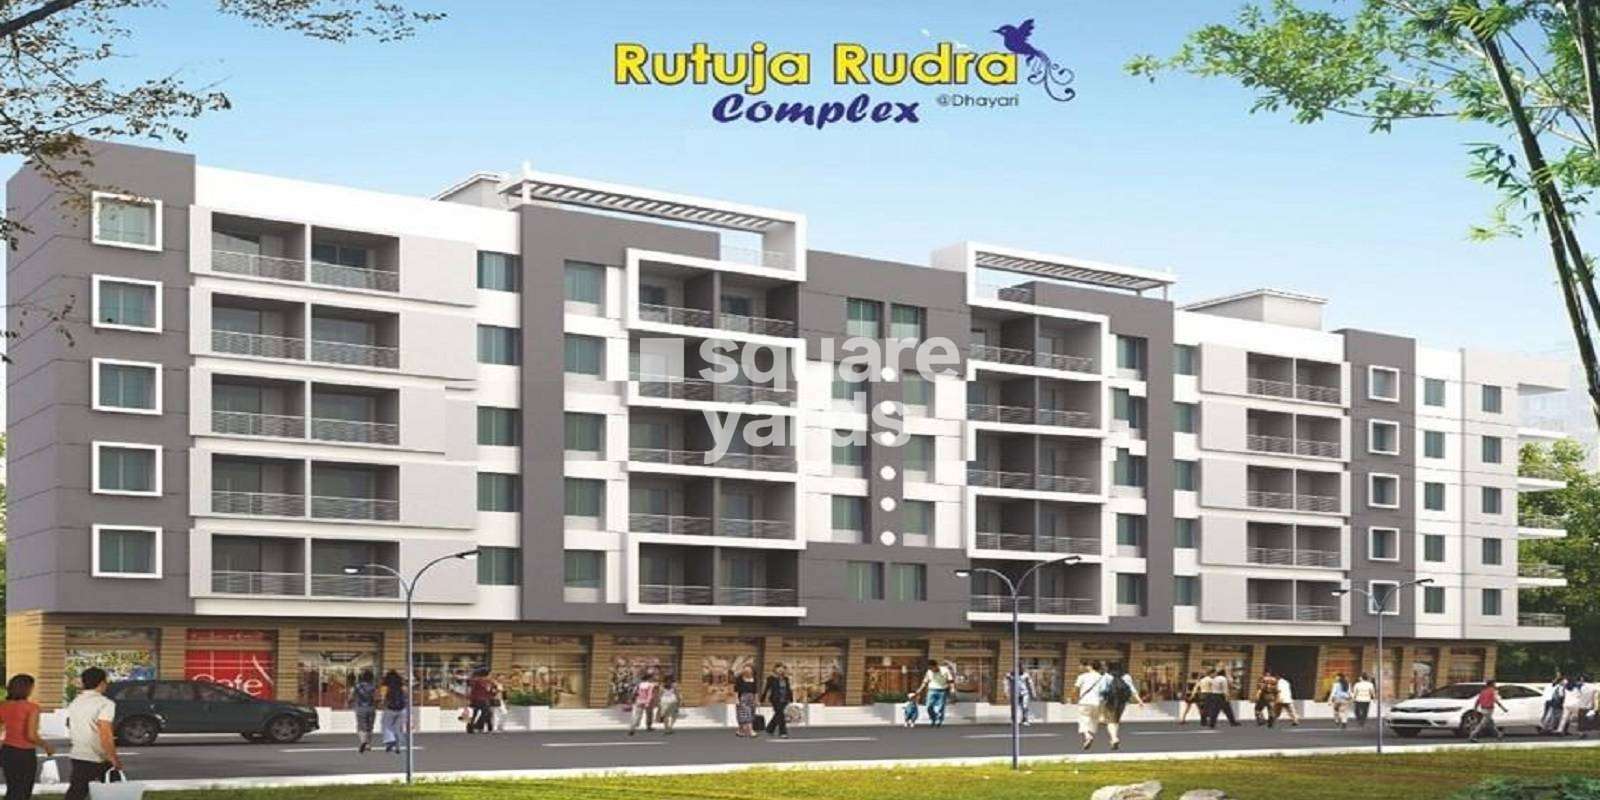 Rutuja Rudra Complex Cover Image